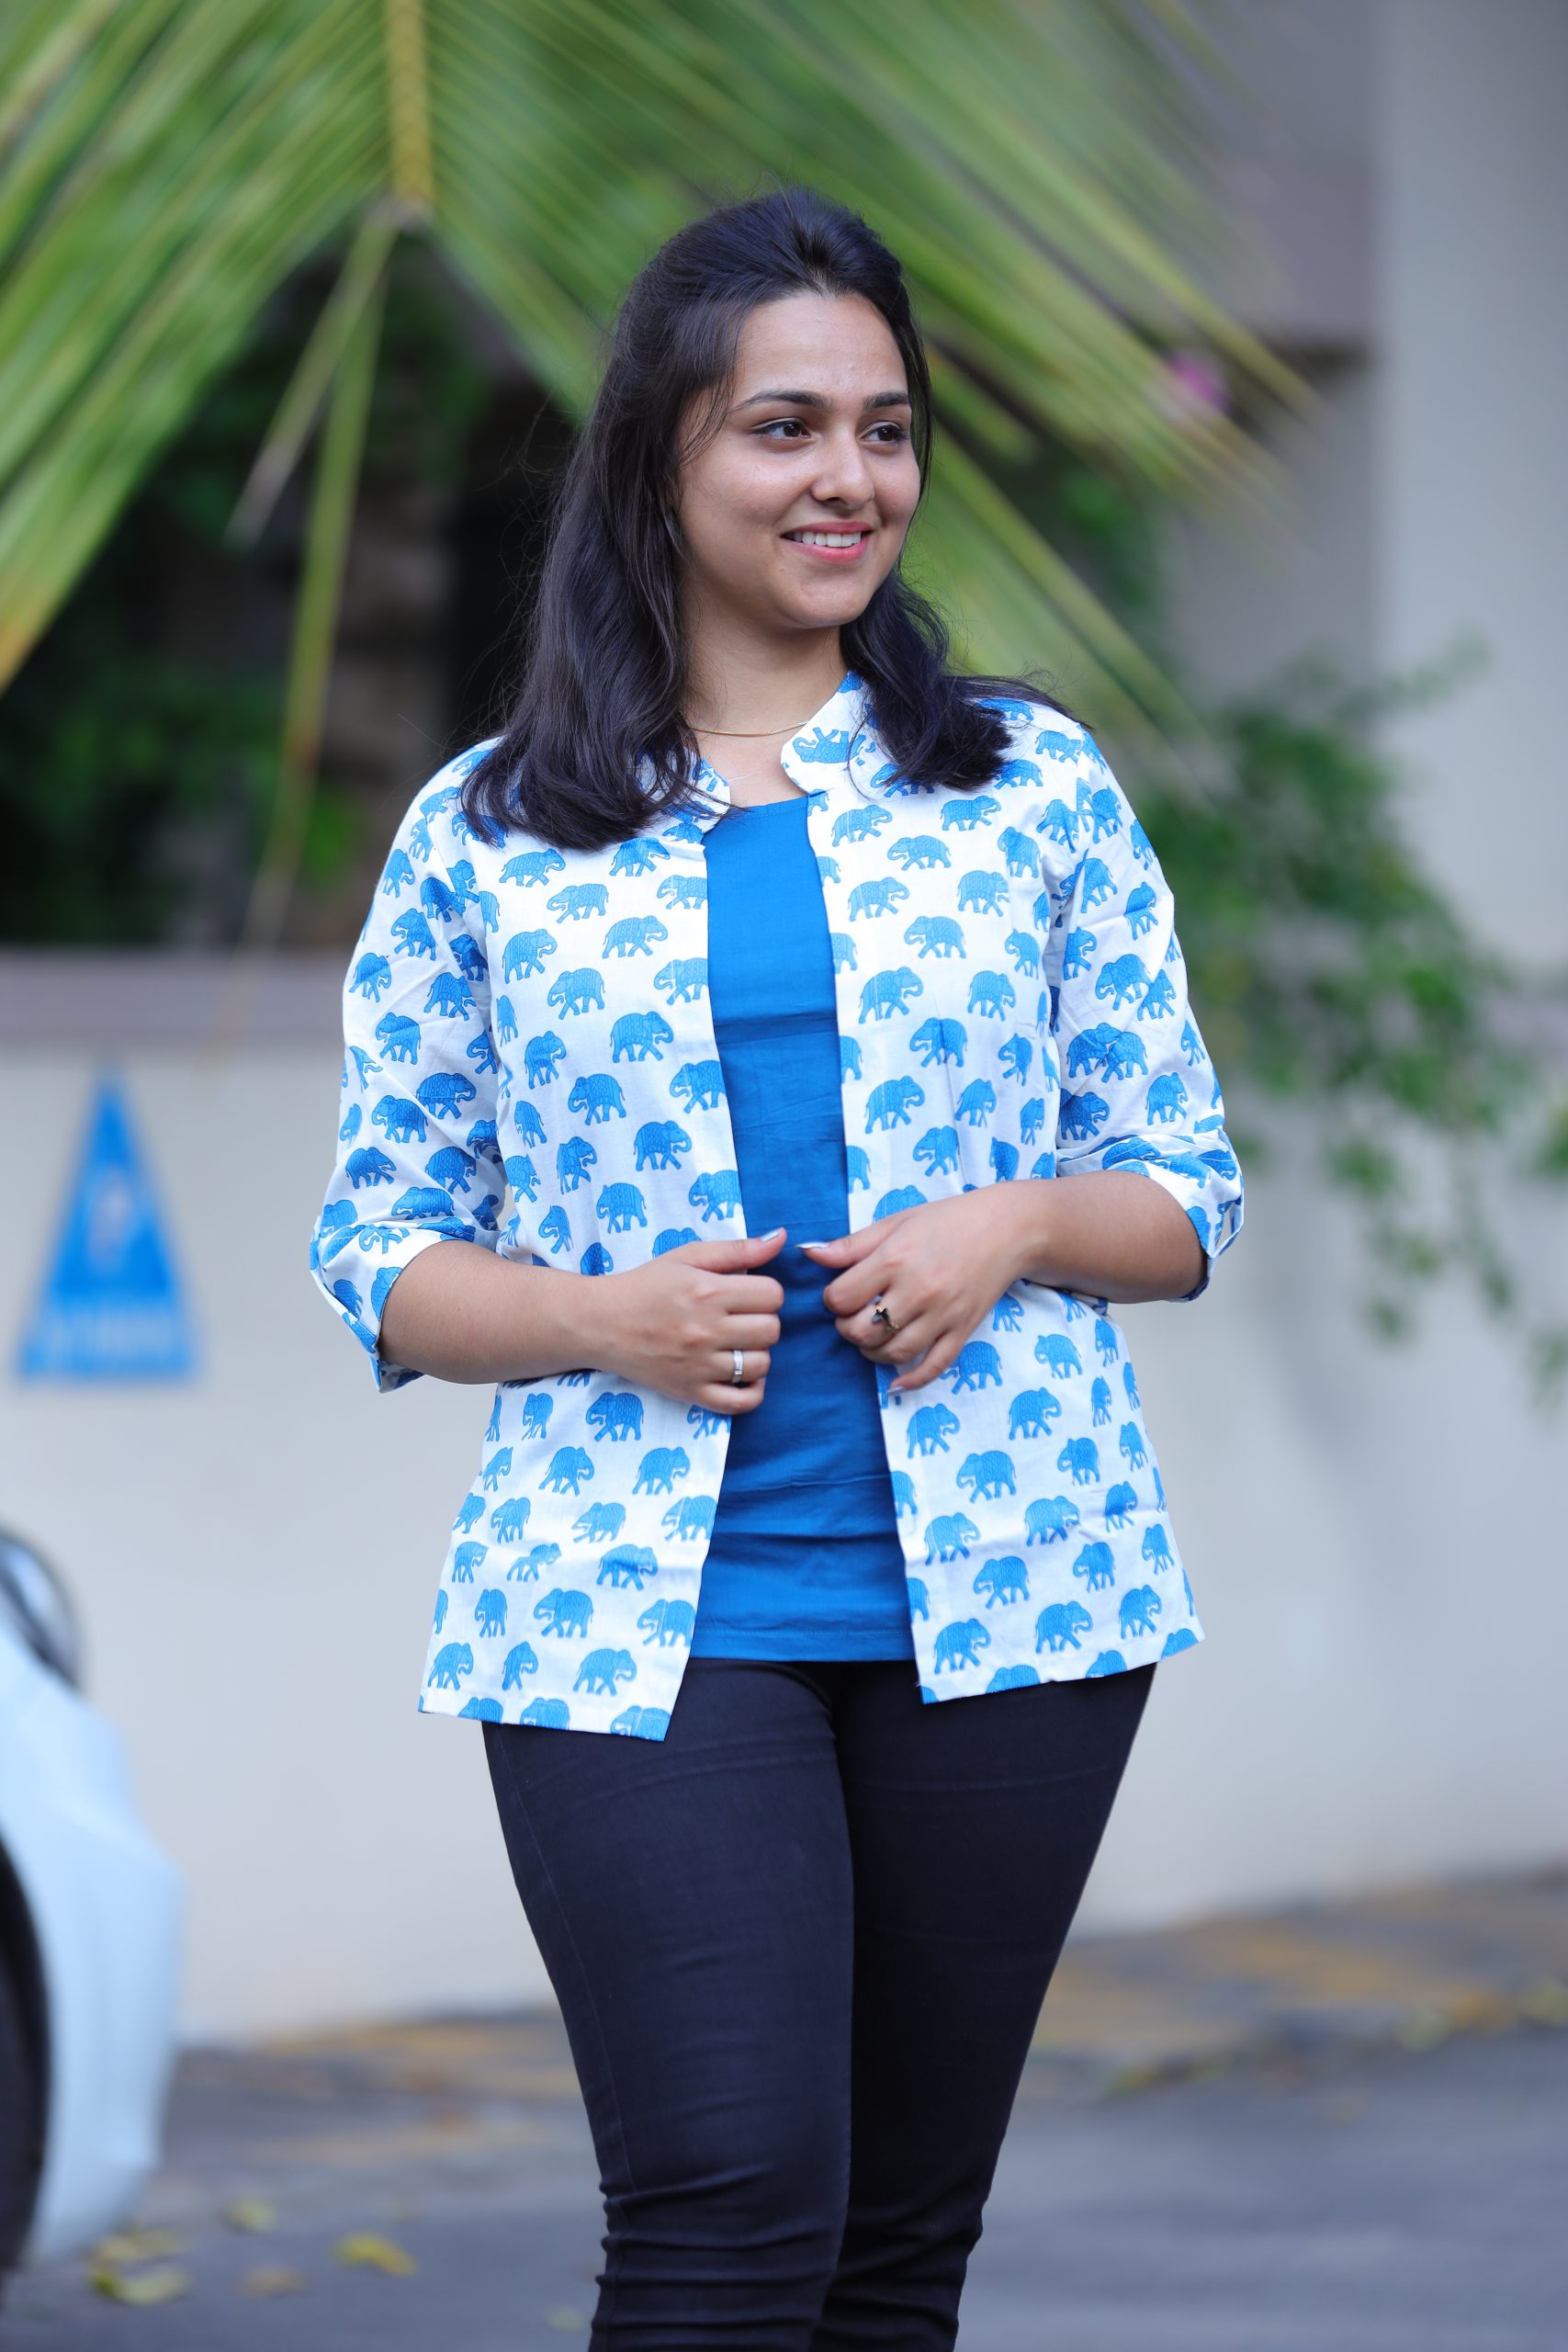 White with blue elephant jacket tops - Lotus Fashions, Coimbatore